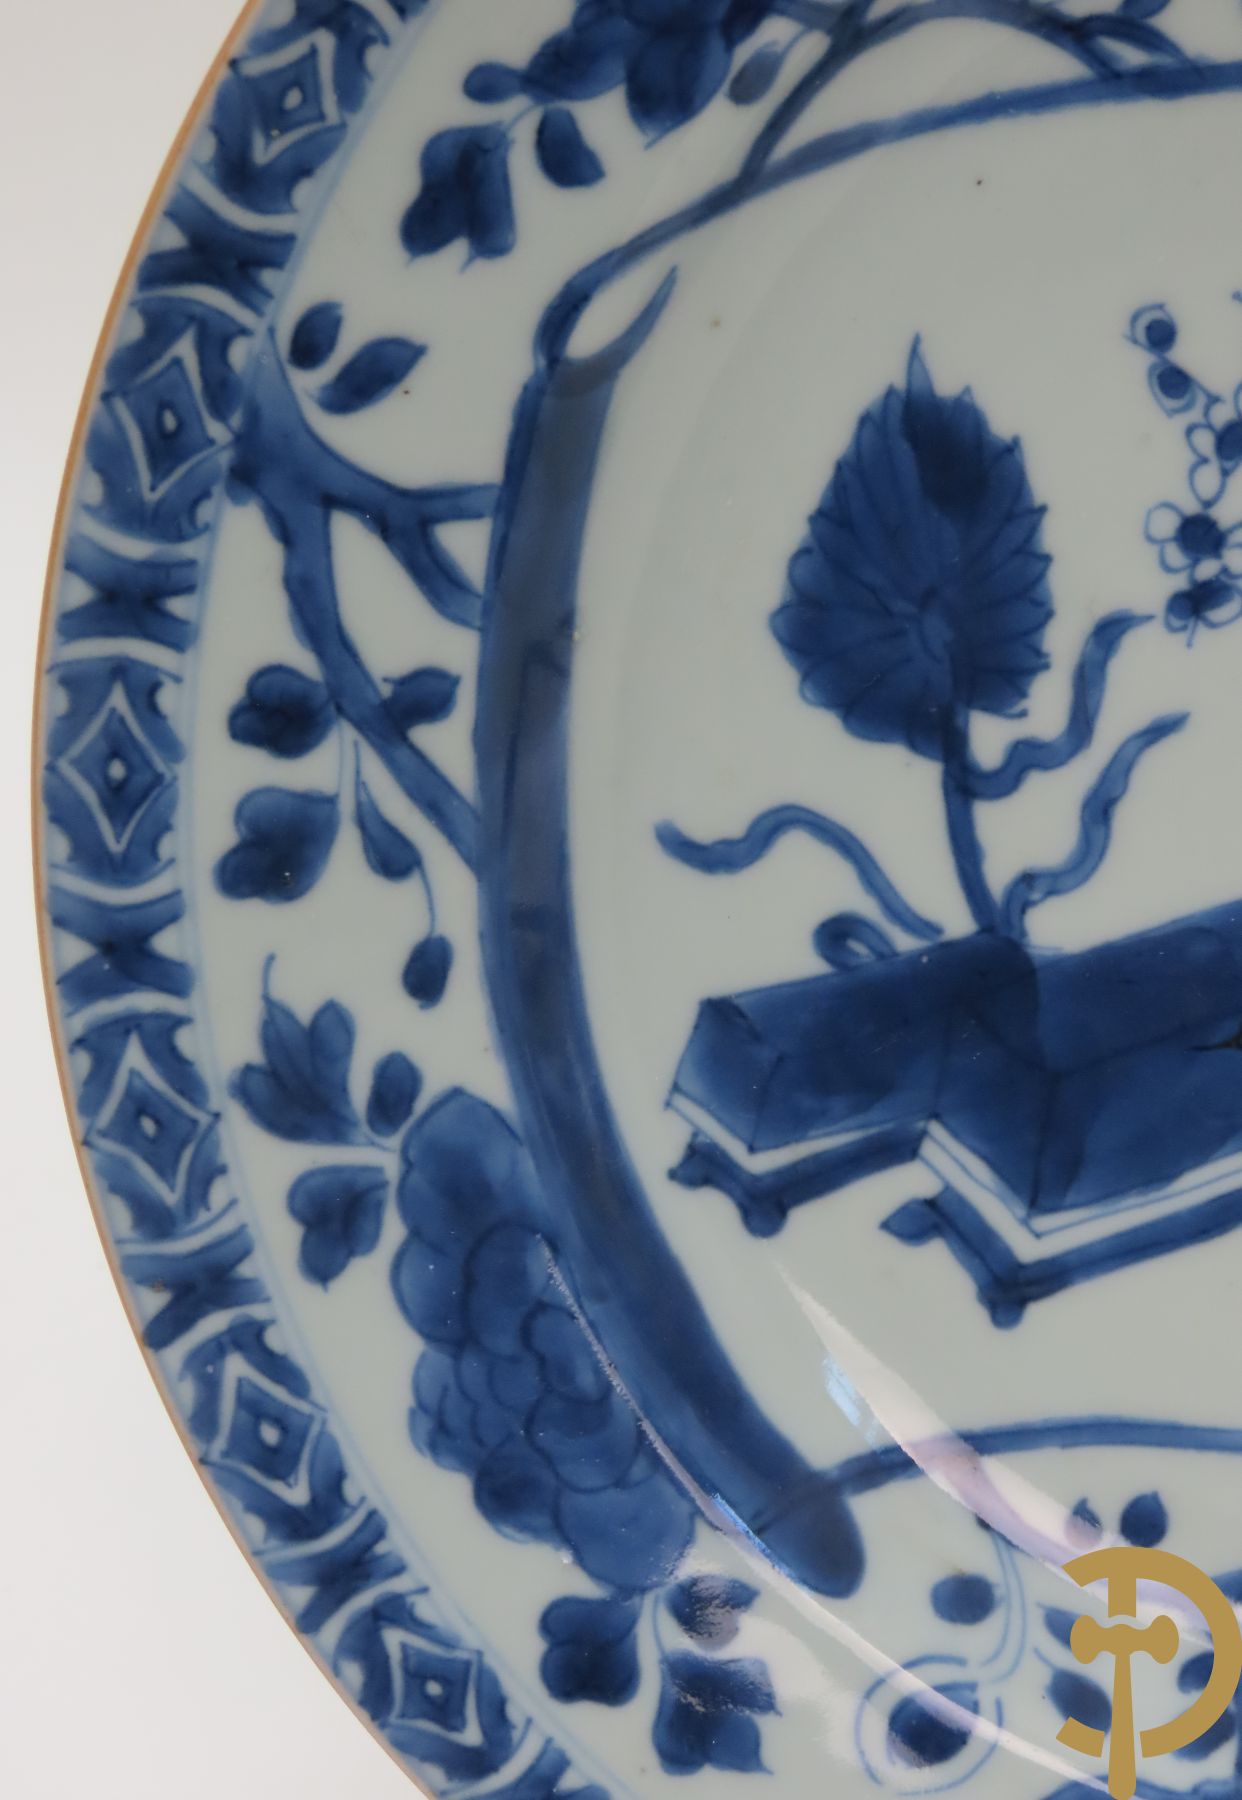 Drie Chinese porseleinen borden met landschaps- en vazendecor, 17e